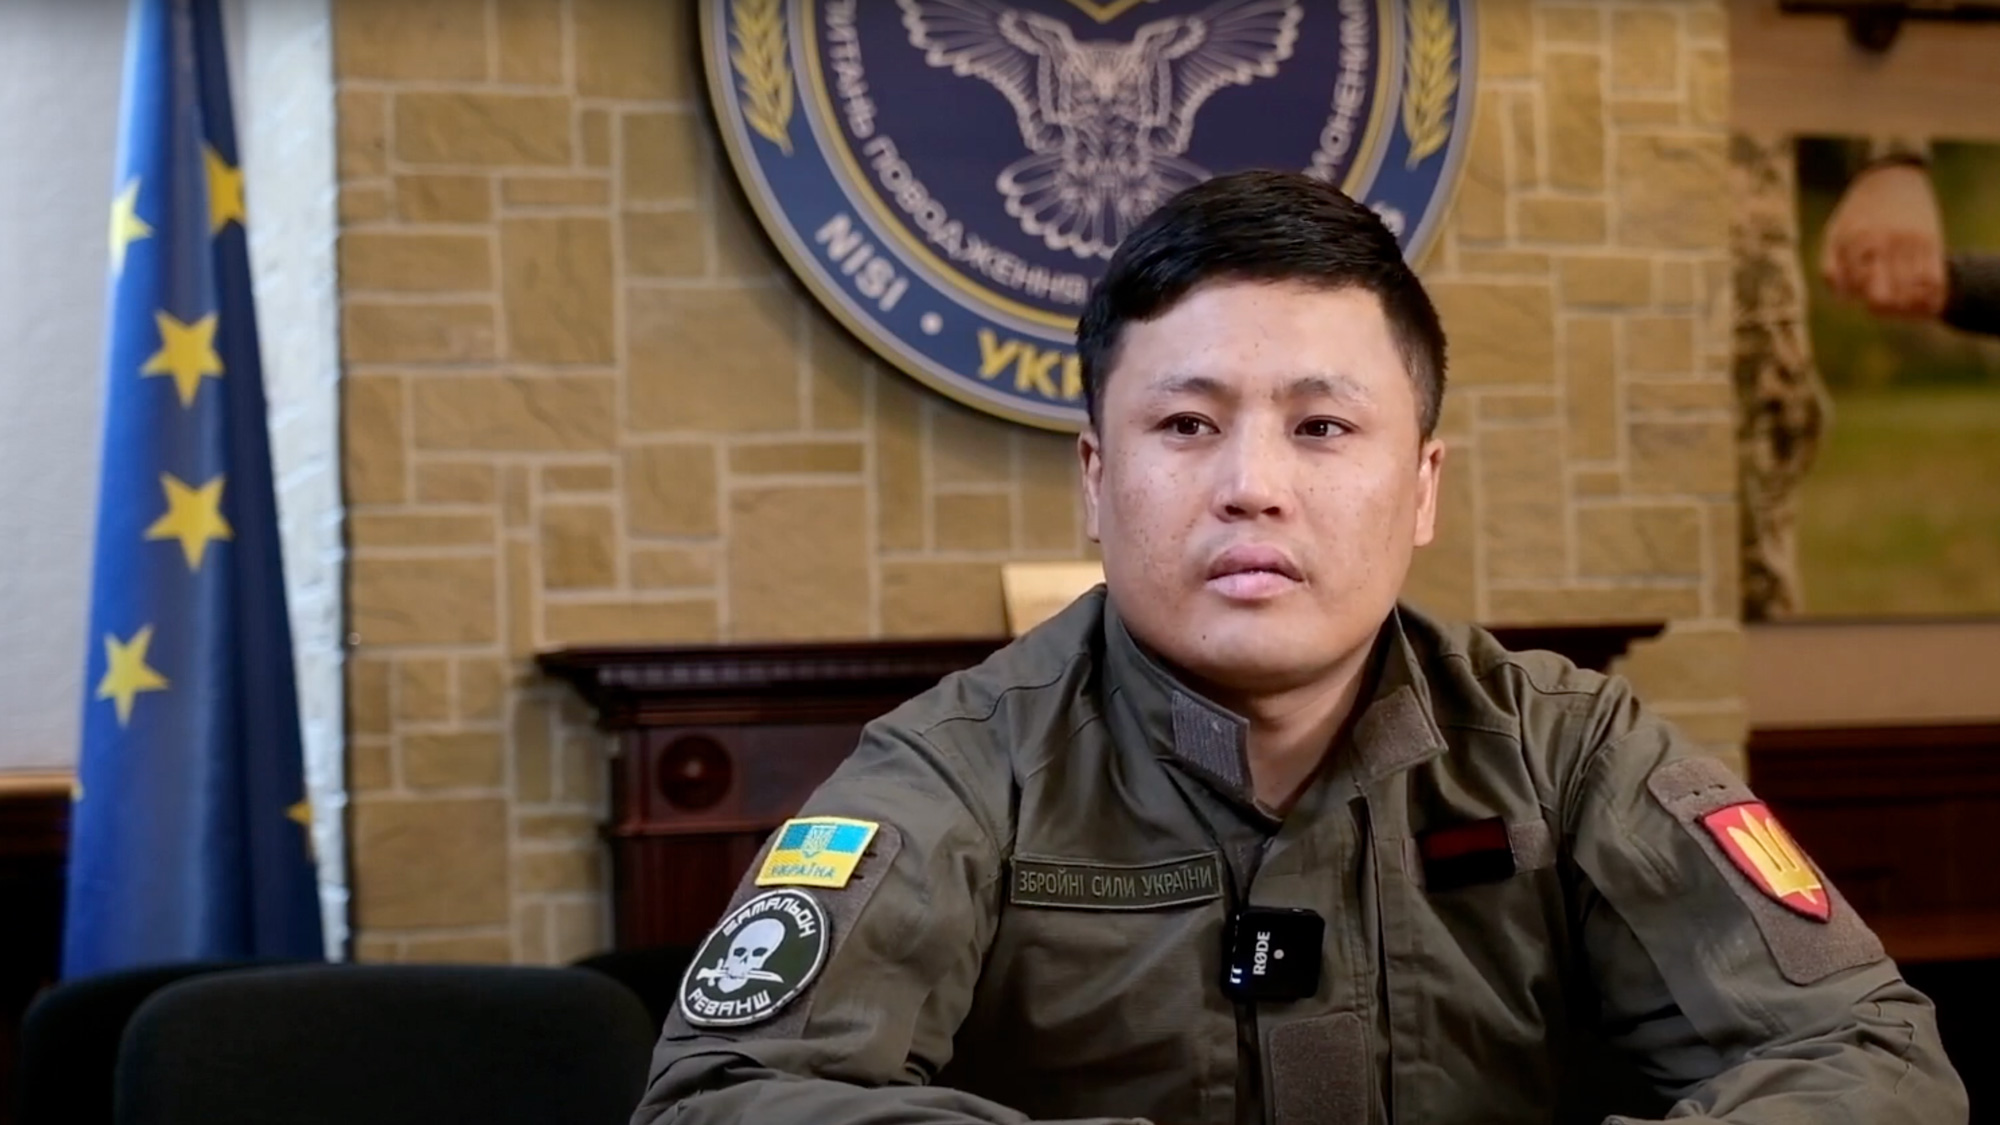 Как парикмахер из Бишкека создал украинский националистический батальон Туран